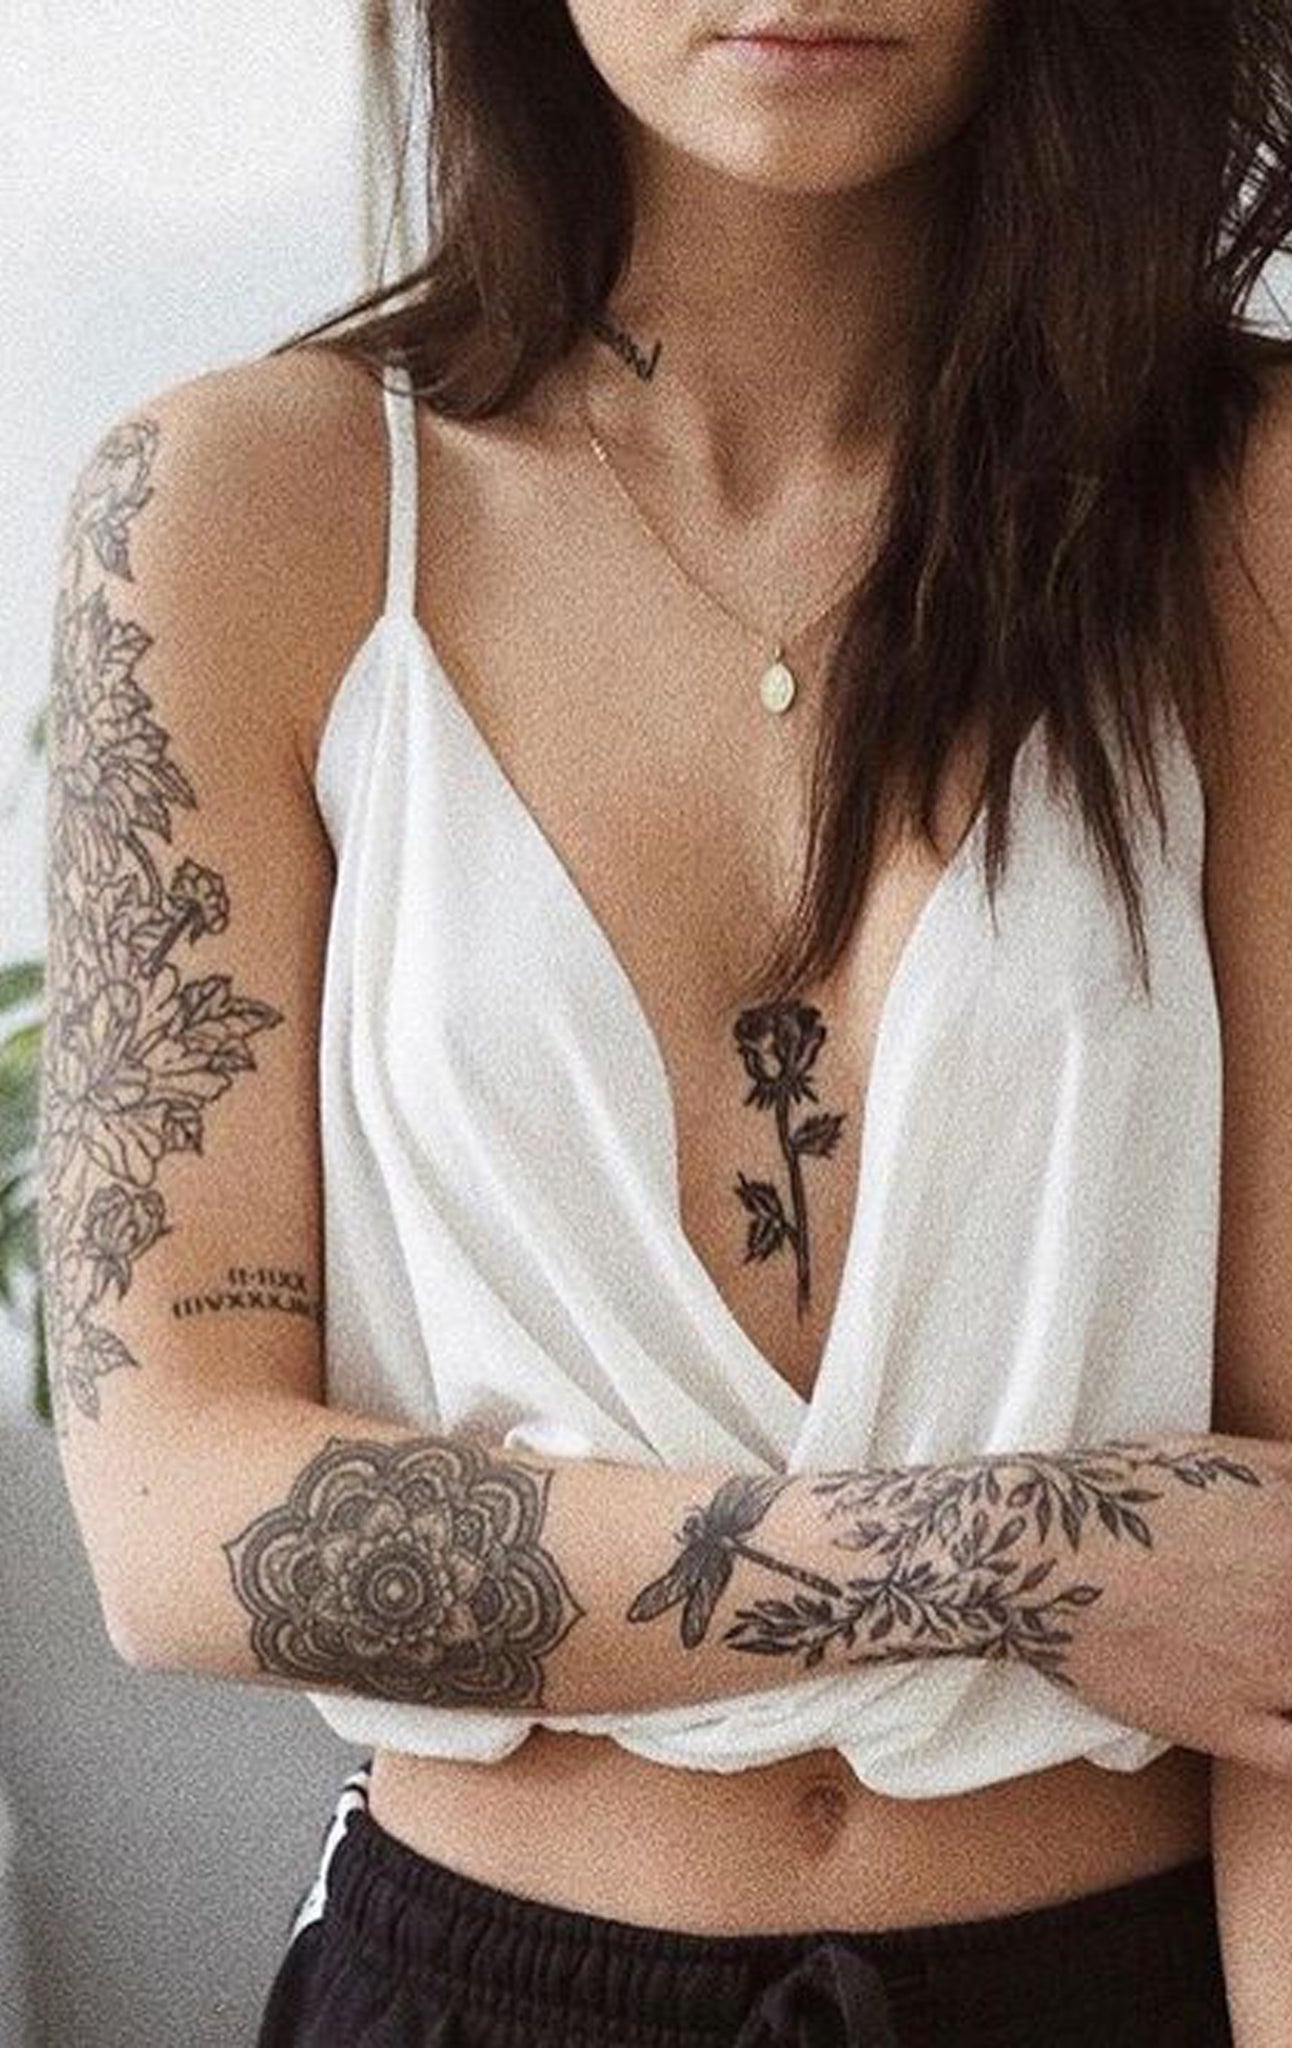 Feminine Rose Sternum Tattoo Ideas for Women - Black Flower Arm Tat - www.MyBodiArt.com #tattoos 